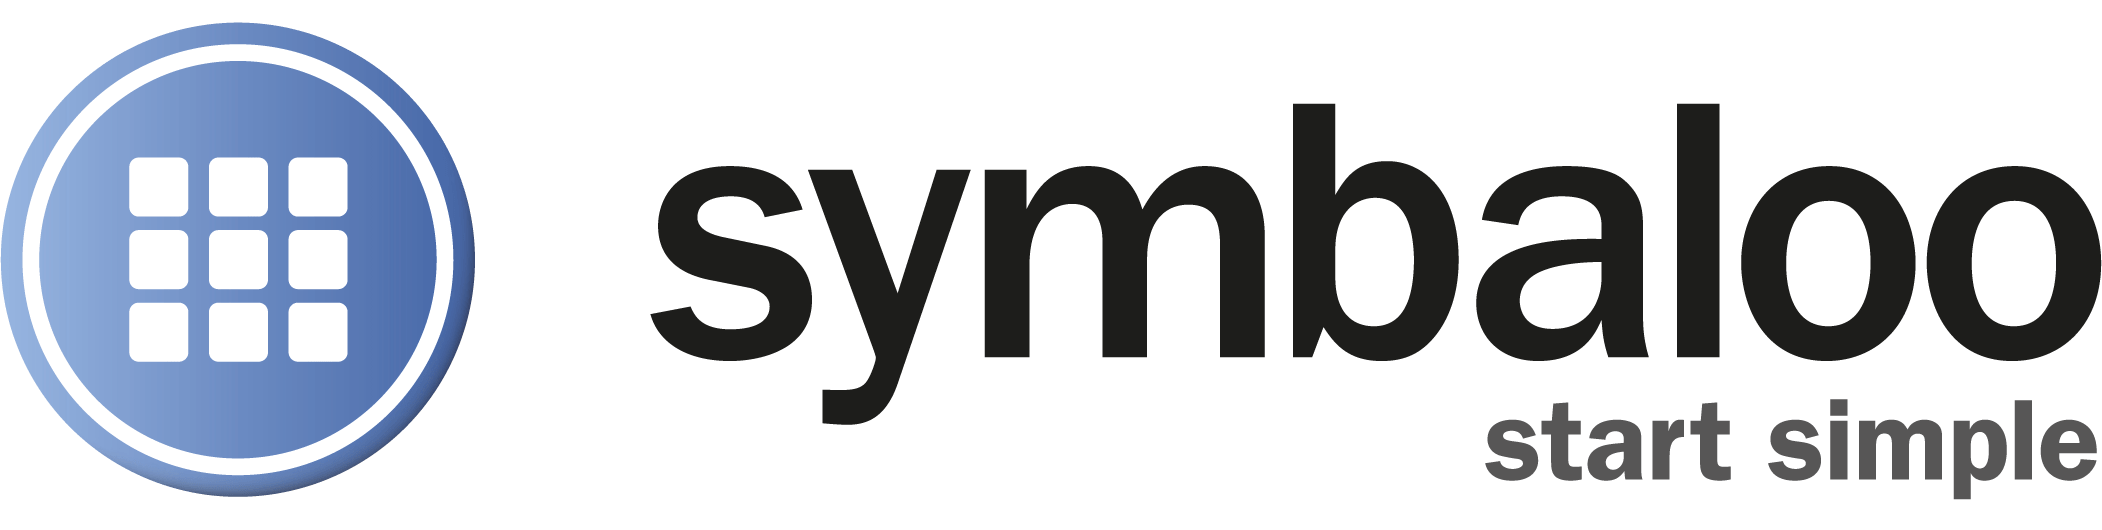 Symbaloo Logo - Tools For Curating the Web: Symbaloo | EVSC ICATS